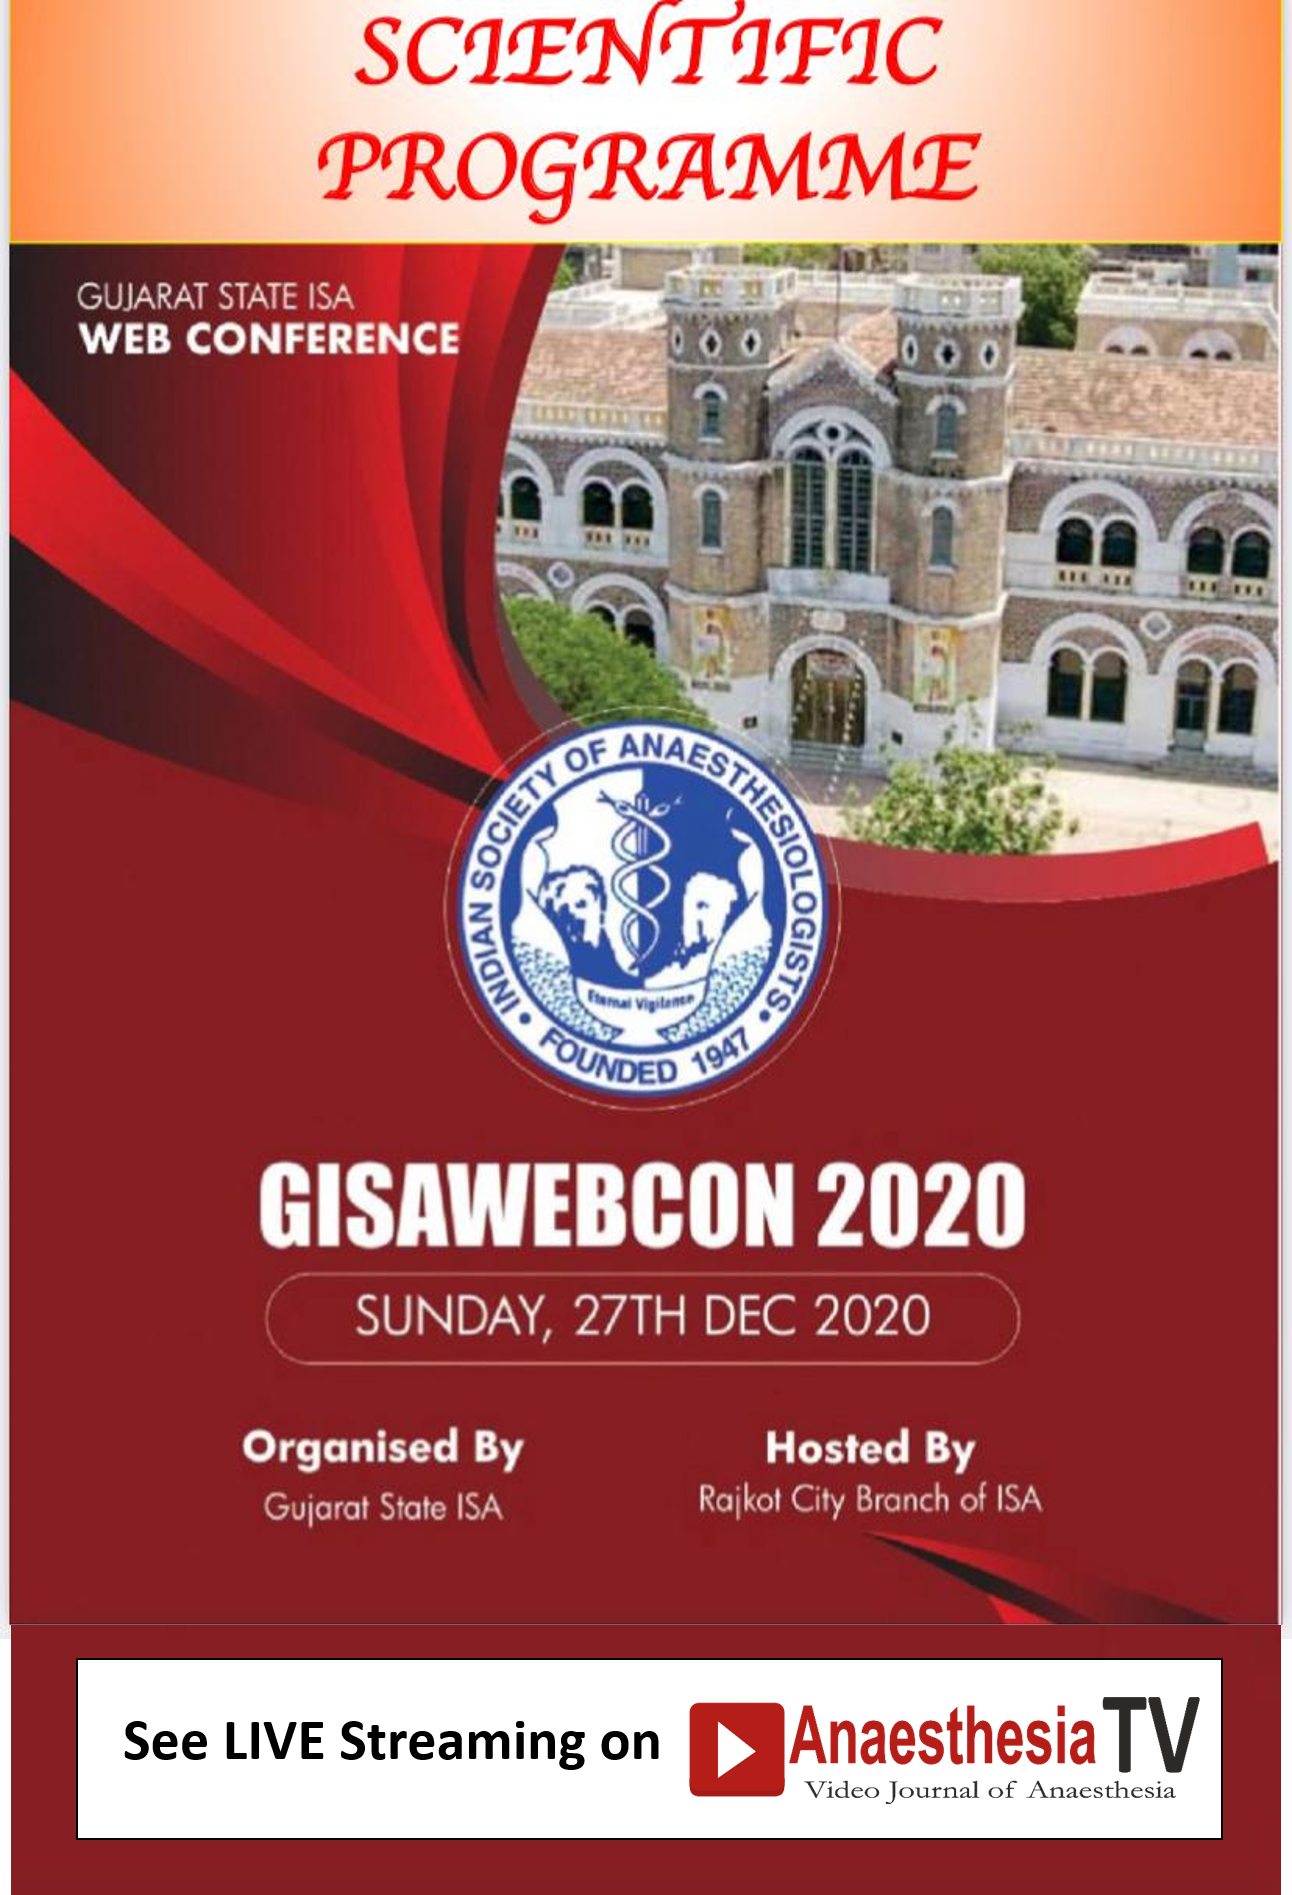 GISAWEBCON 2020